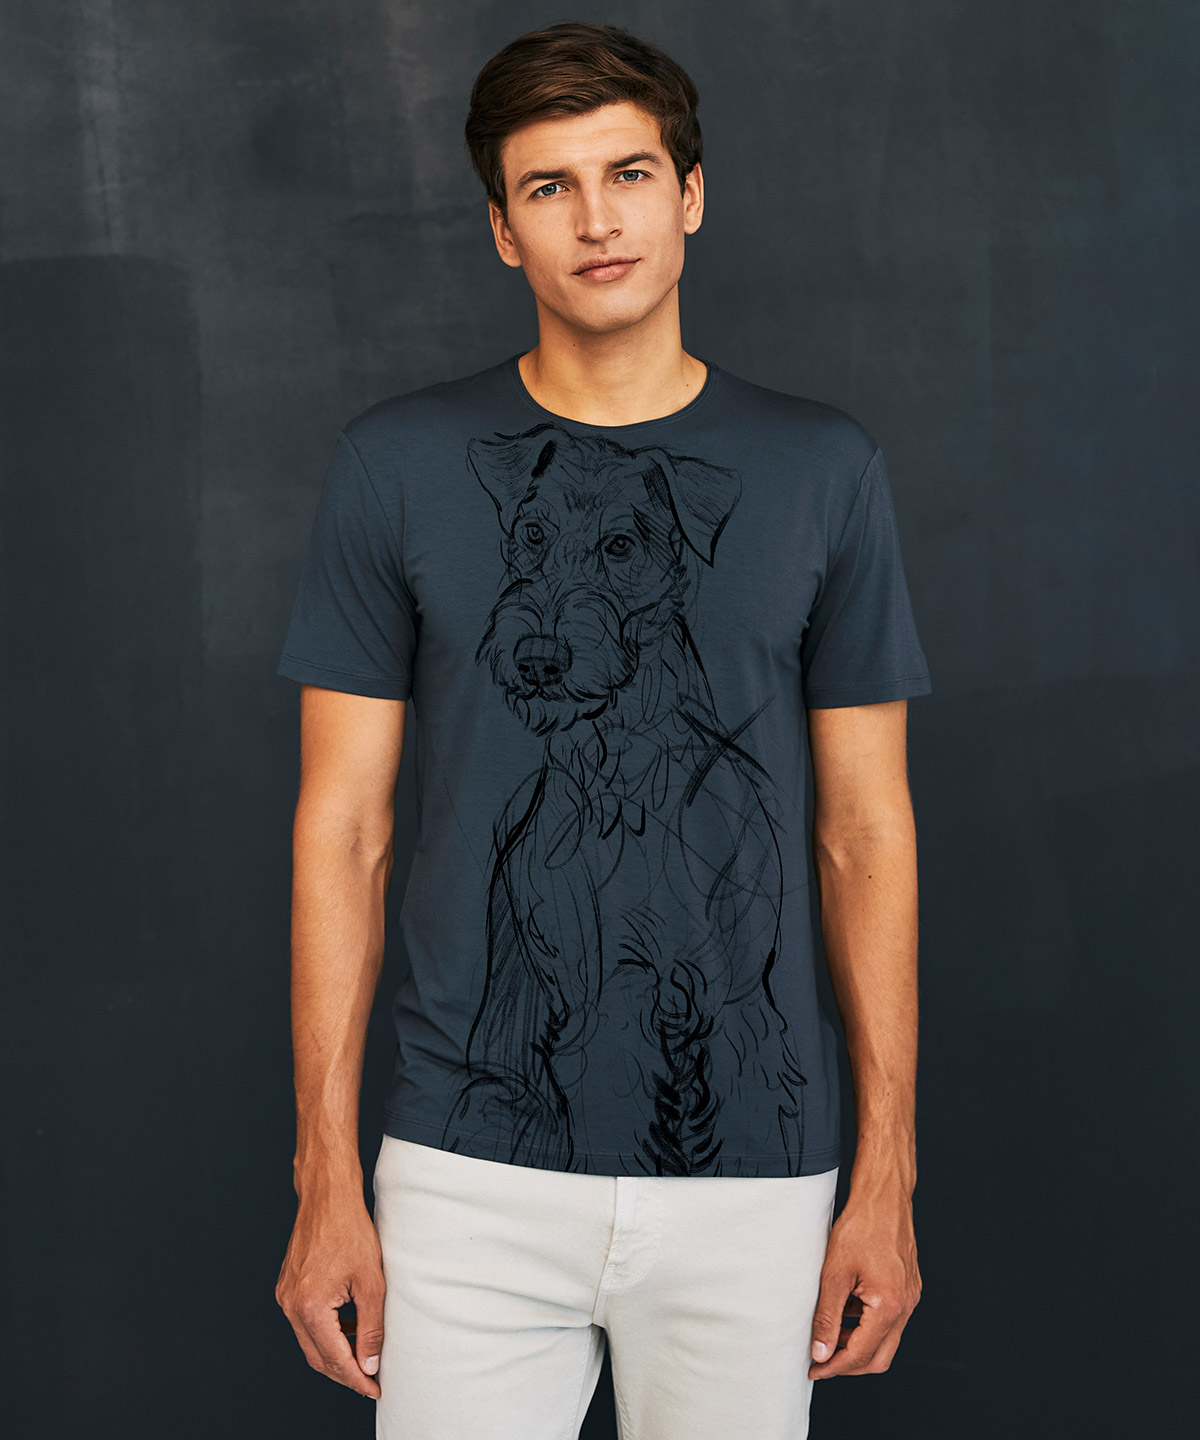 Airedale Terrier dark cool gray t-shirt MAN